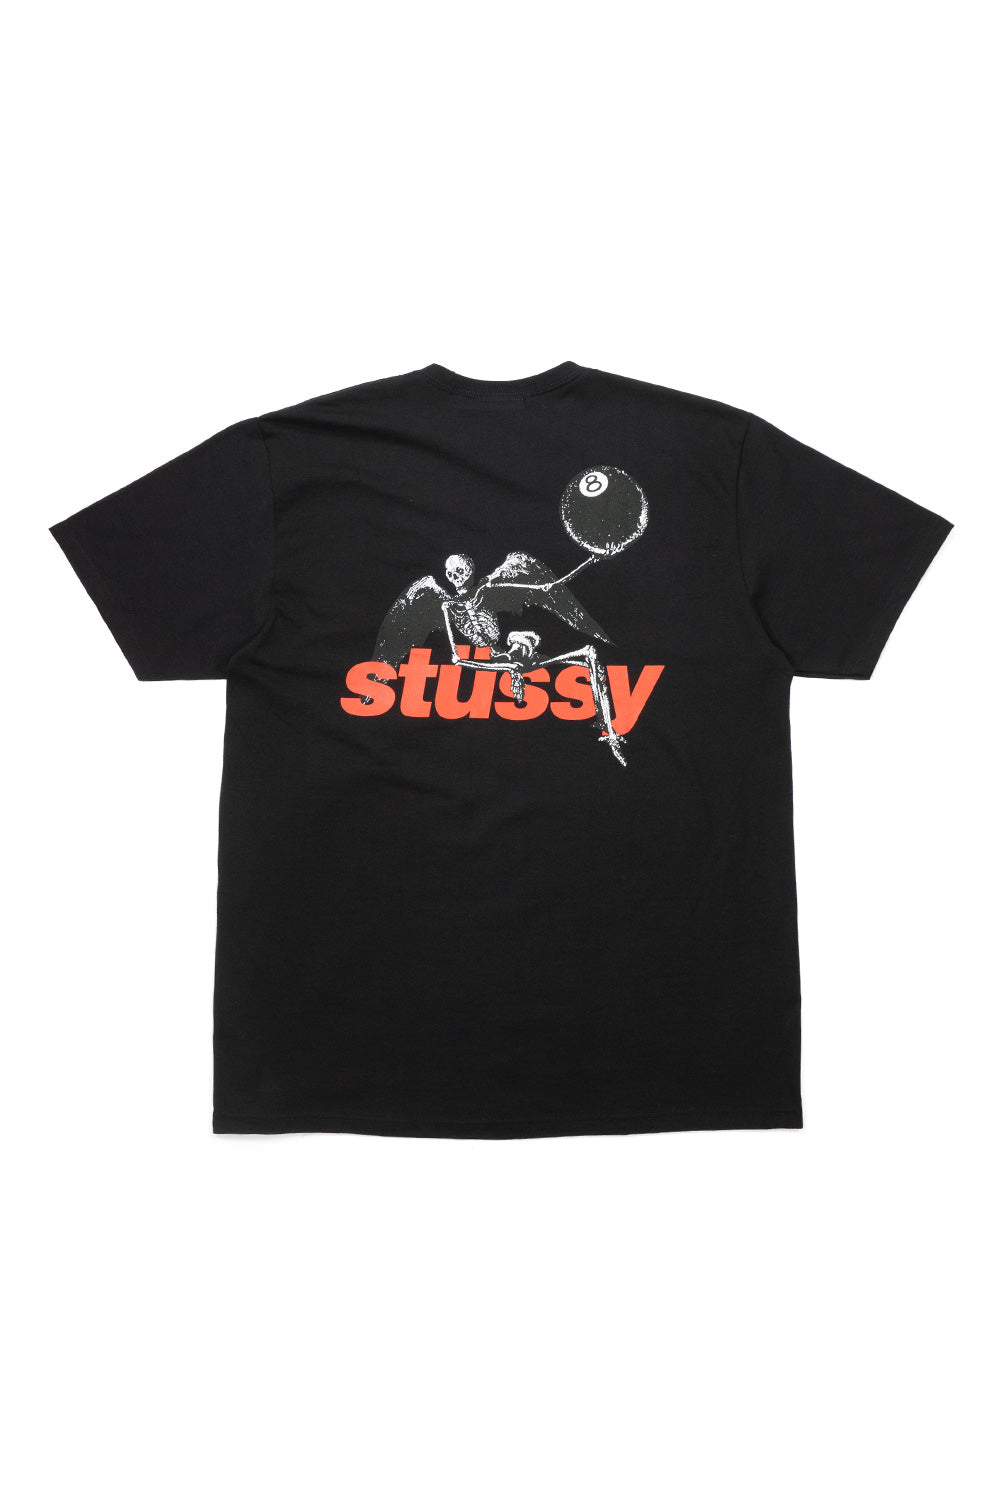 Stussy Apocalypse T-Shirt Black - BONKERS